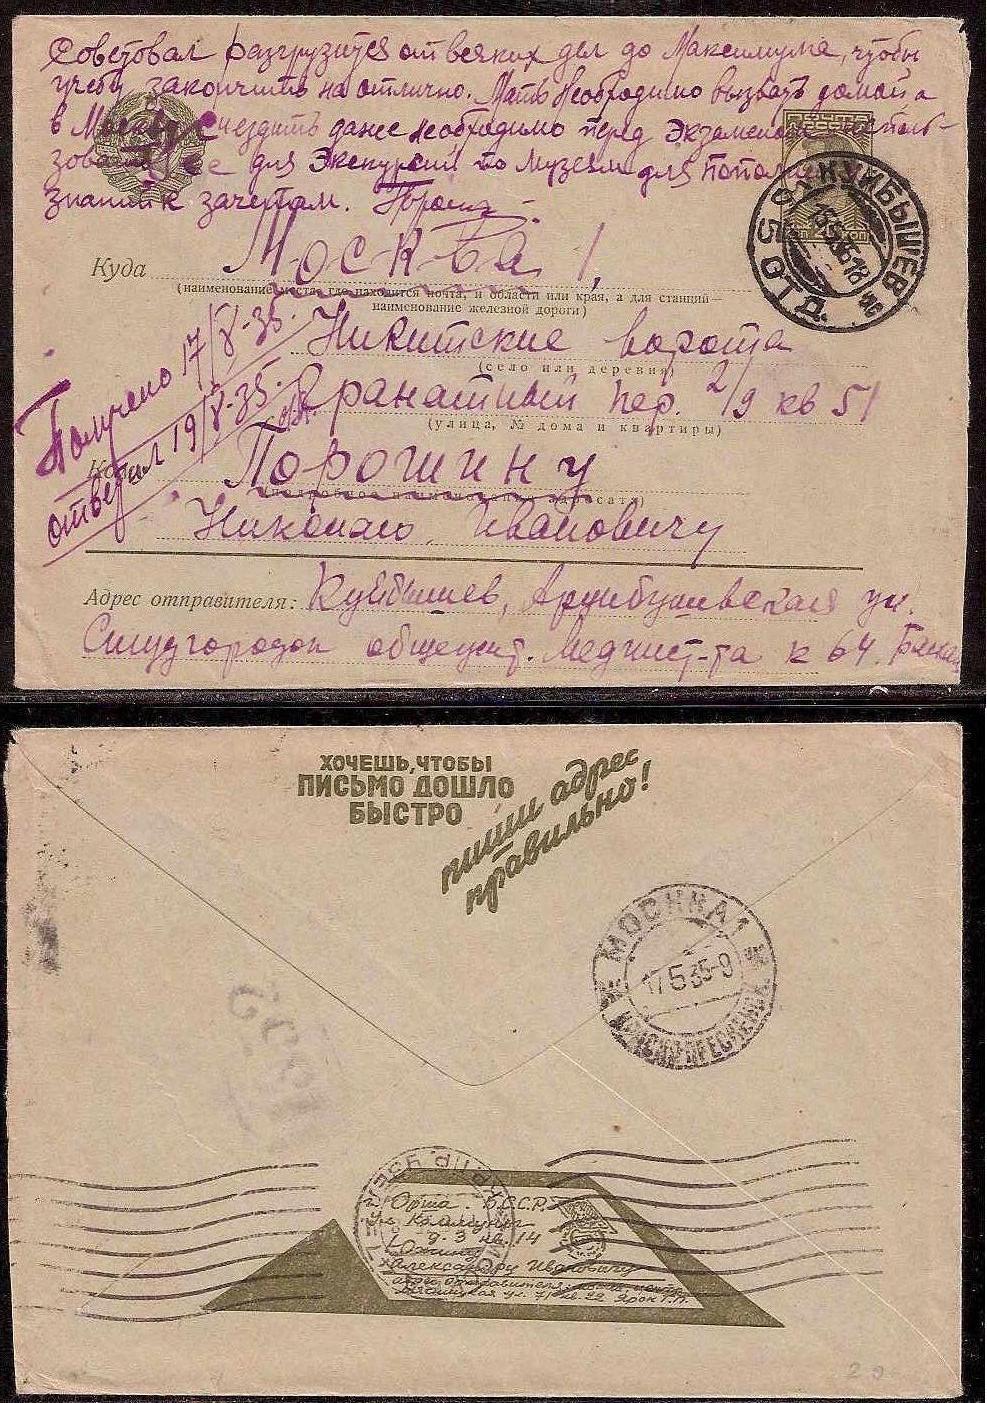 Russia Postal History - Gubernia Samara gubernia Scott 501936 